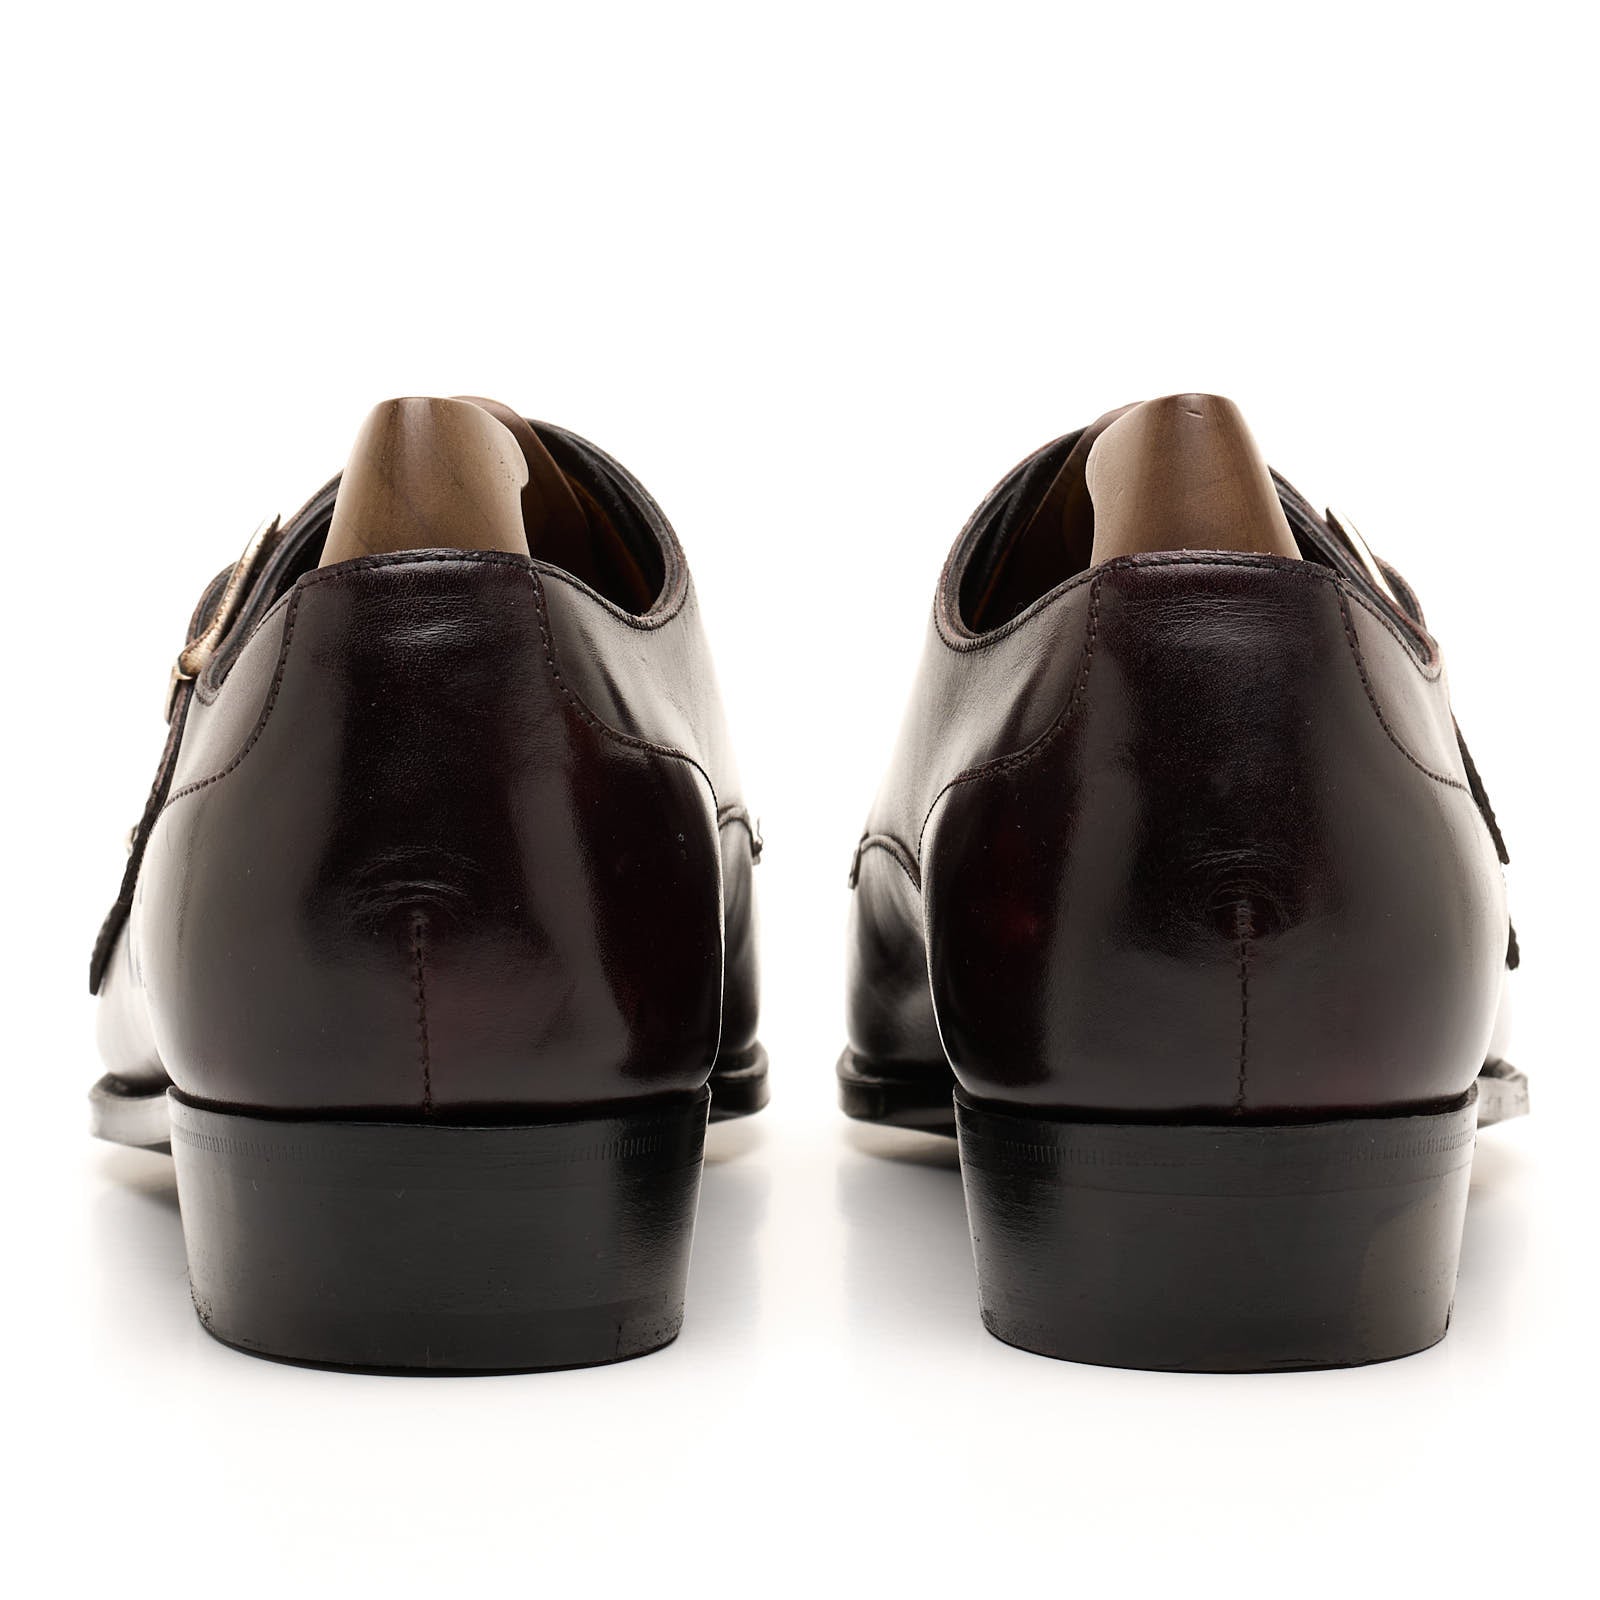 Anthony CLEVERLEY "Caine" Black Leather Double Monk Dress Shoes UK 7.5E US 8